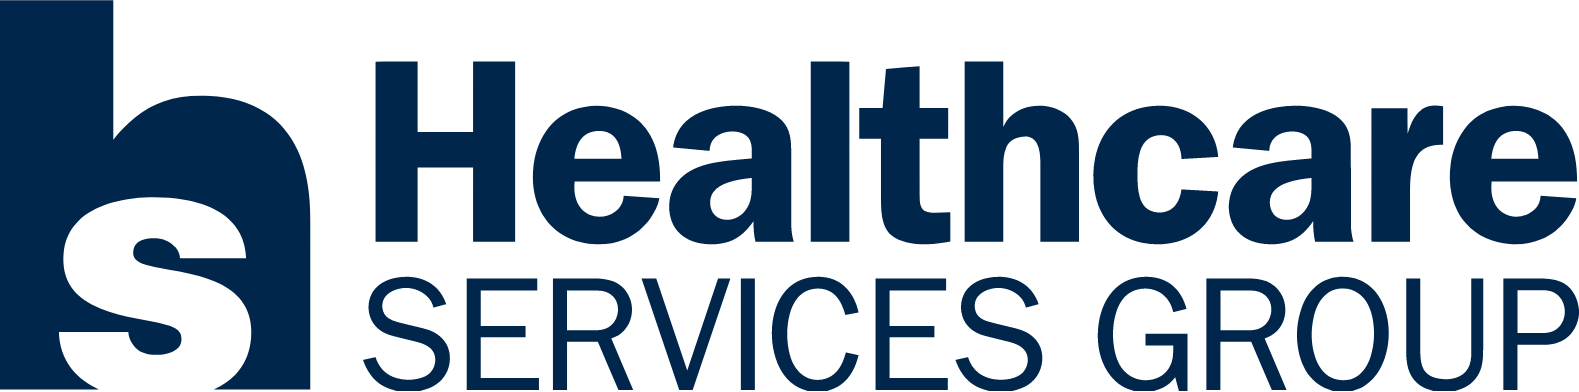 Healthcare Services Group logo large (transparent PNG)